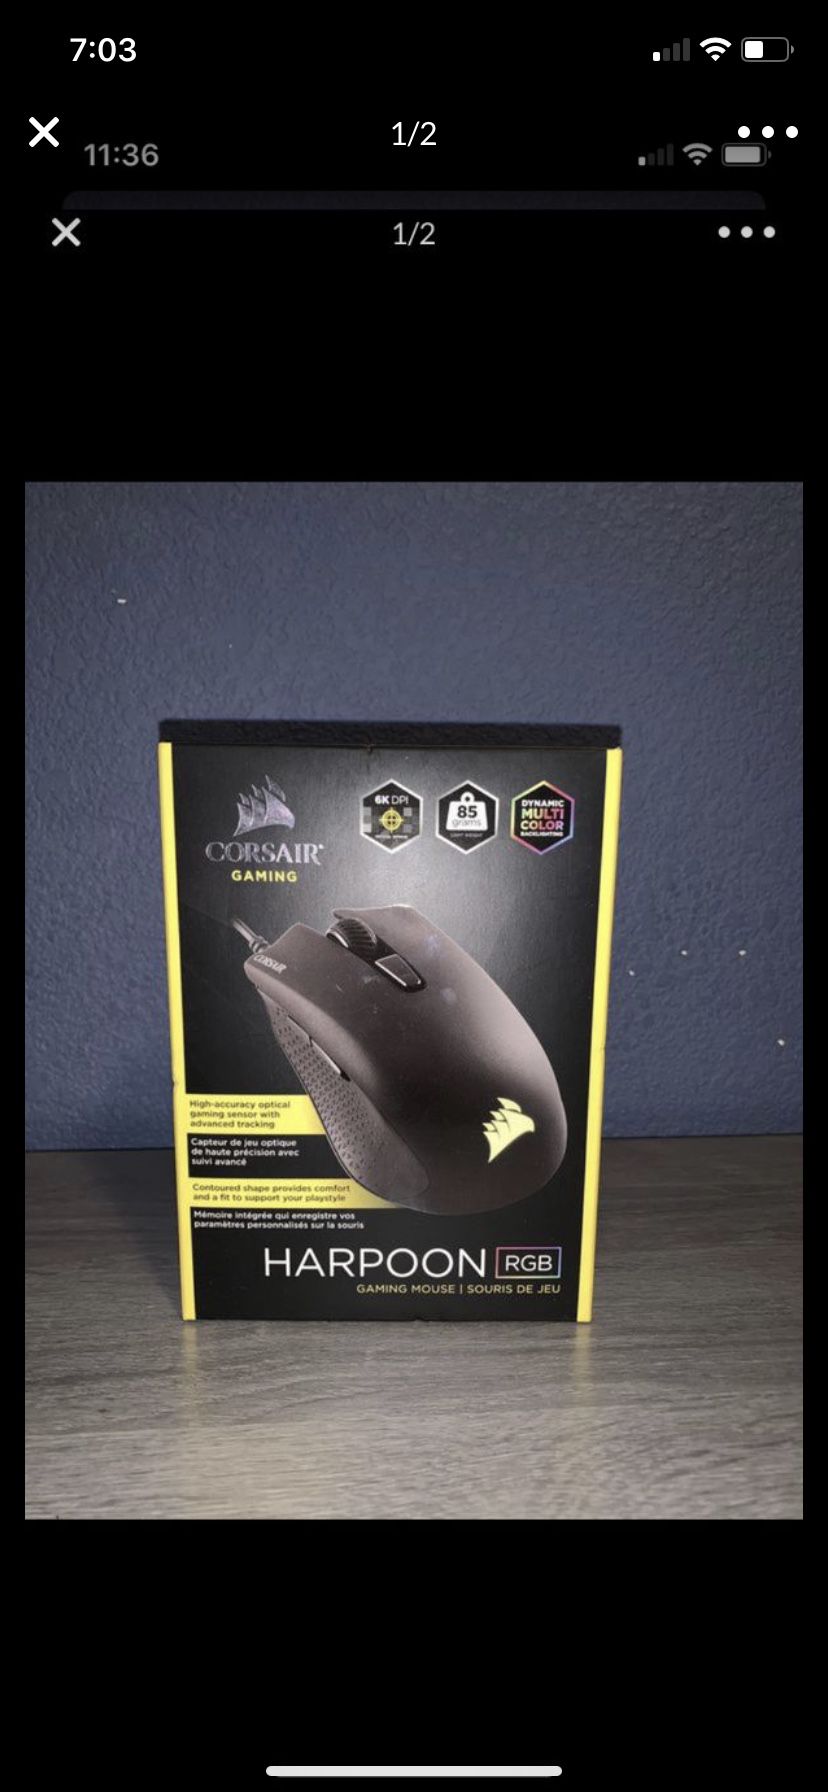 Corsair harpoon RGB gaming mouse